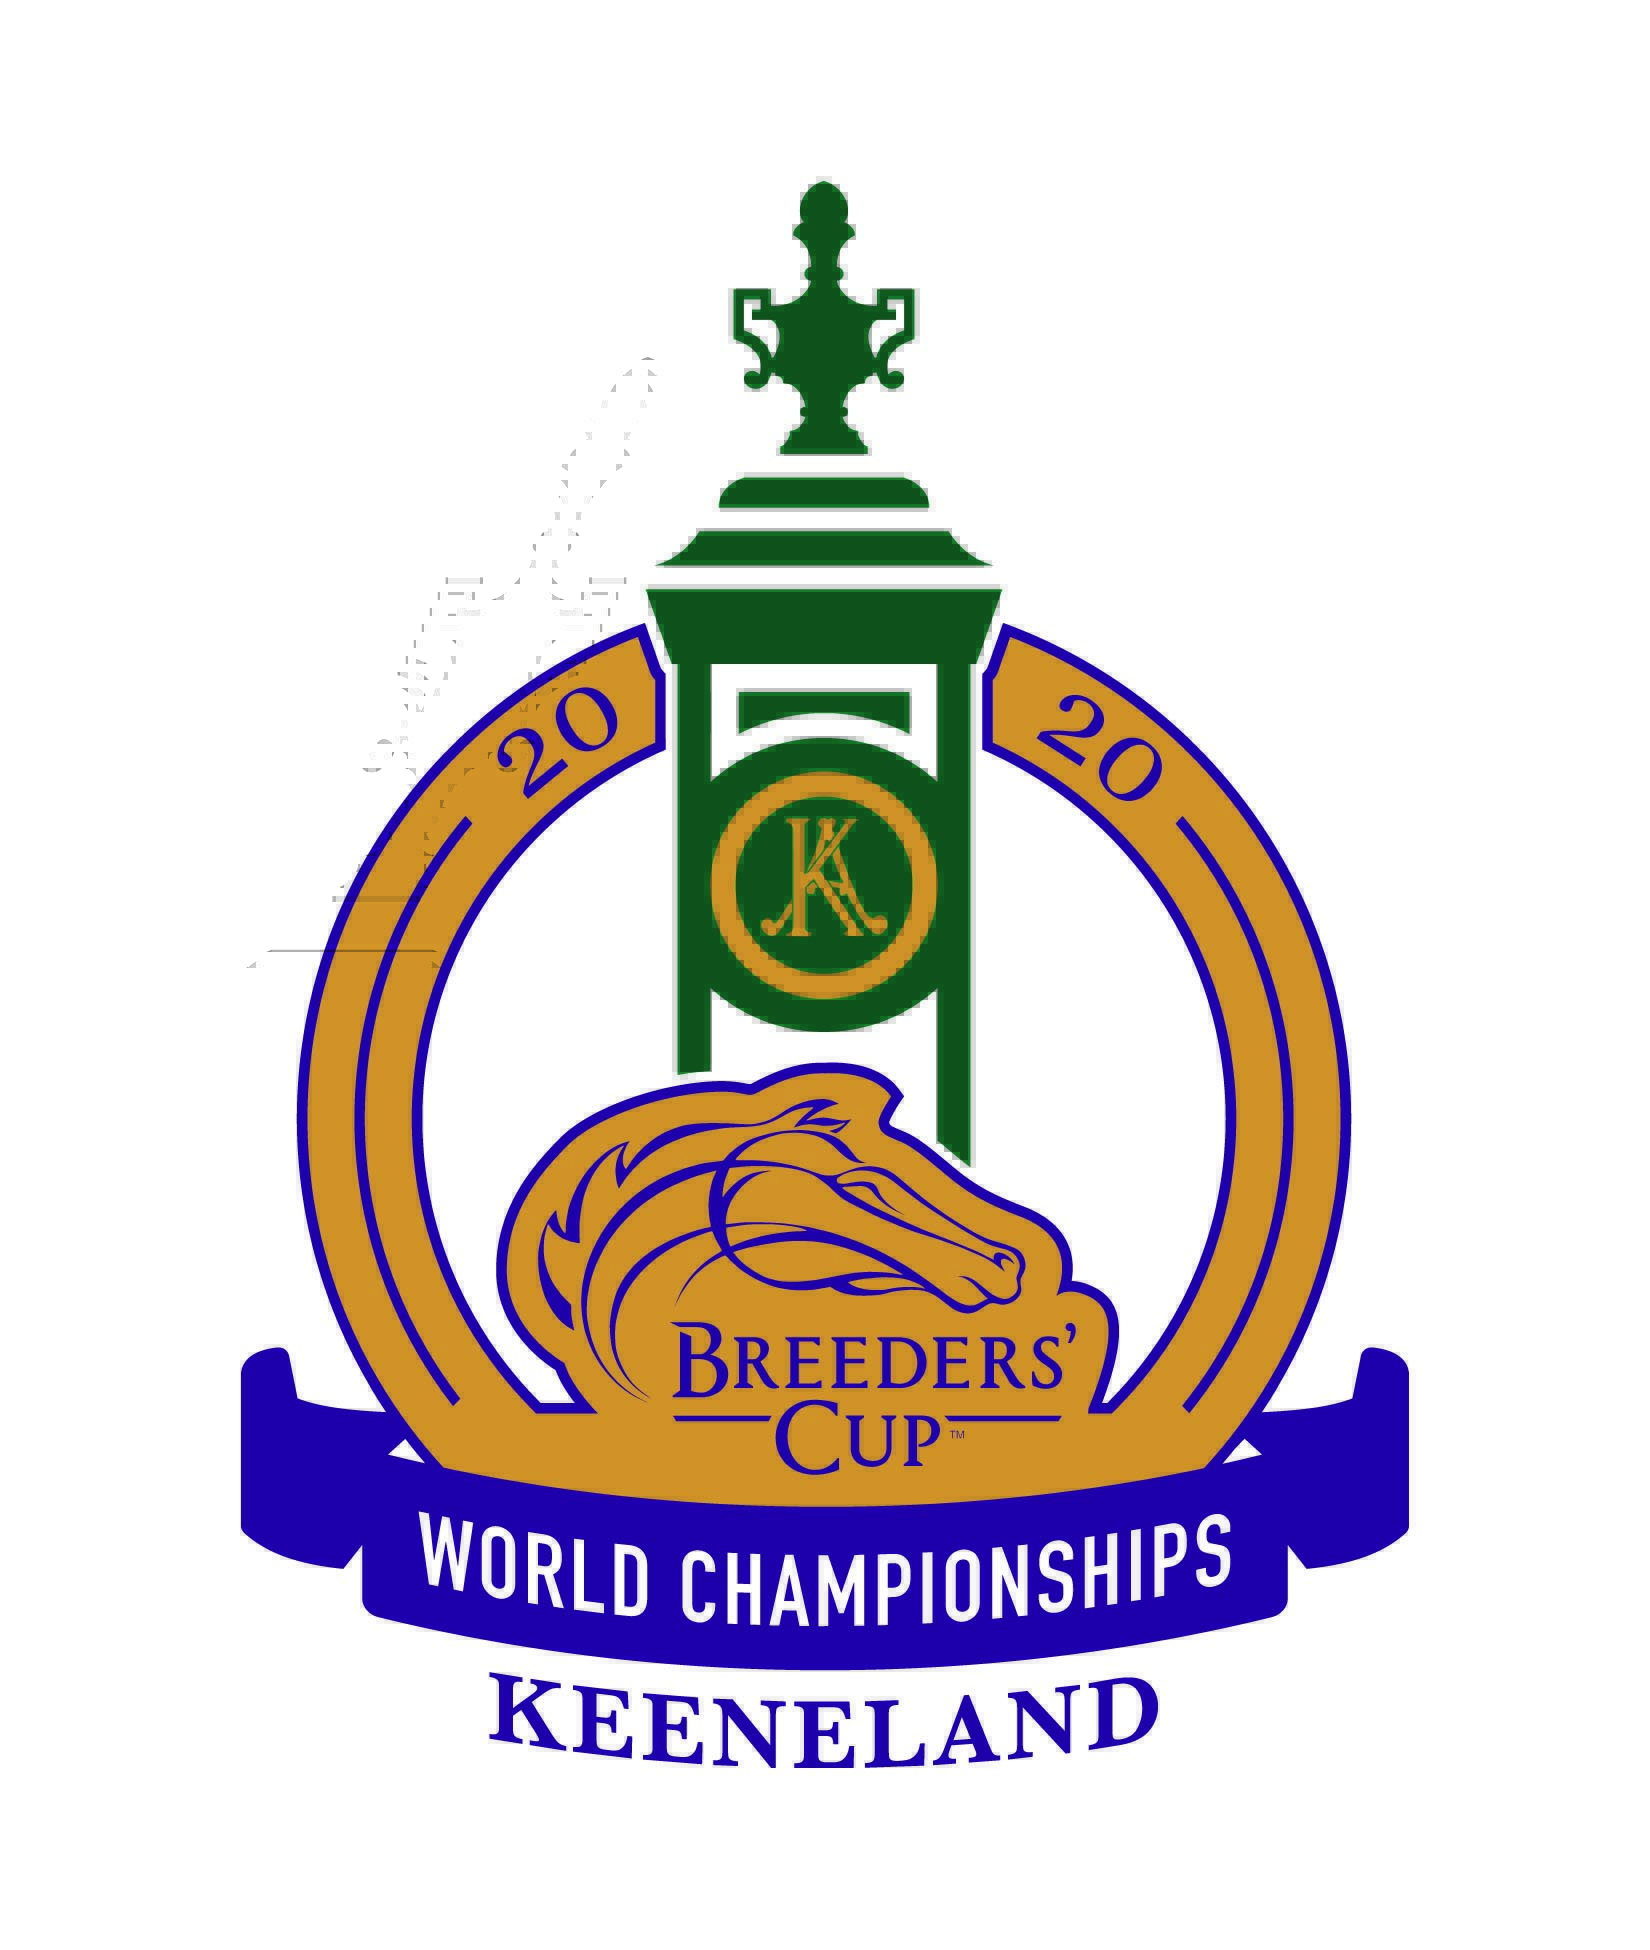 https://www.keeneland.com/sites/default/files/BC_Keeneland_2020_TM_4C_0.jpg